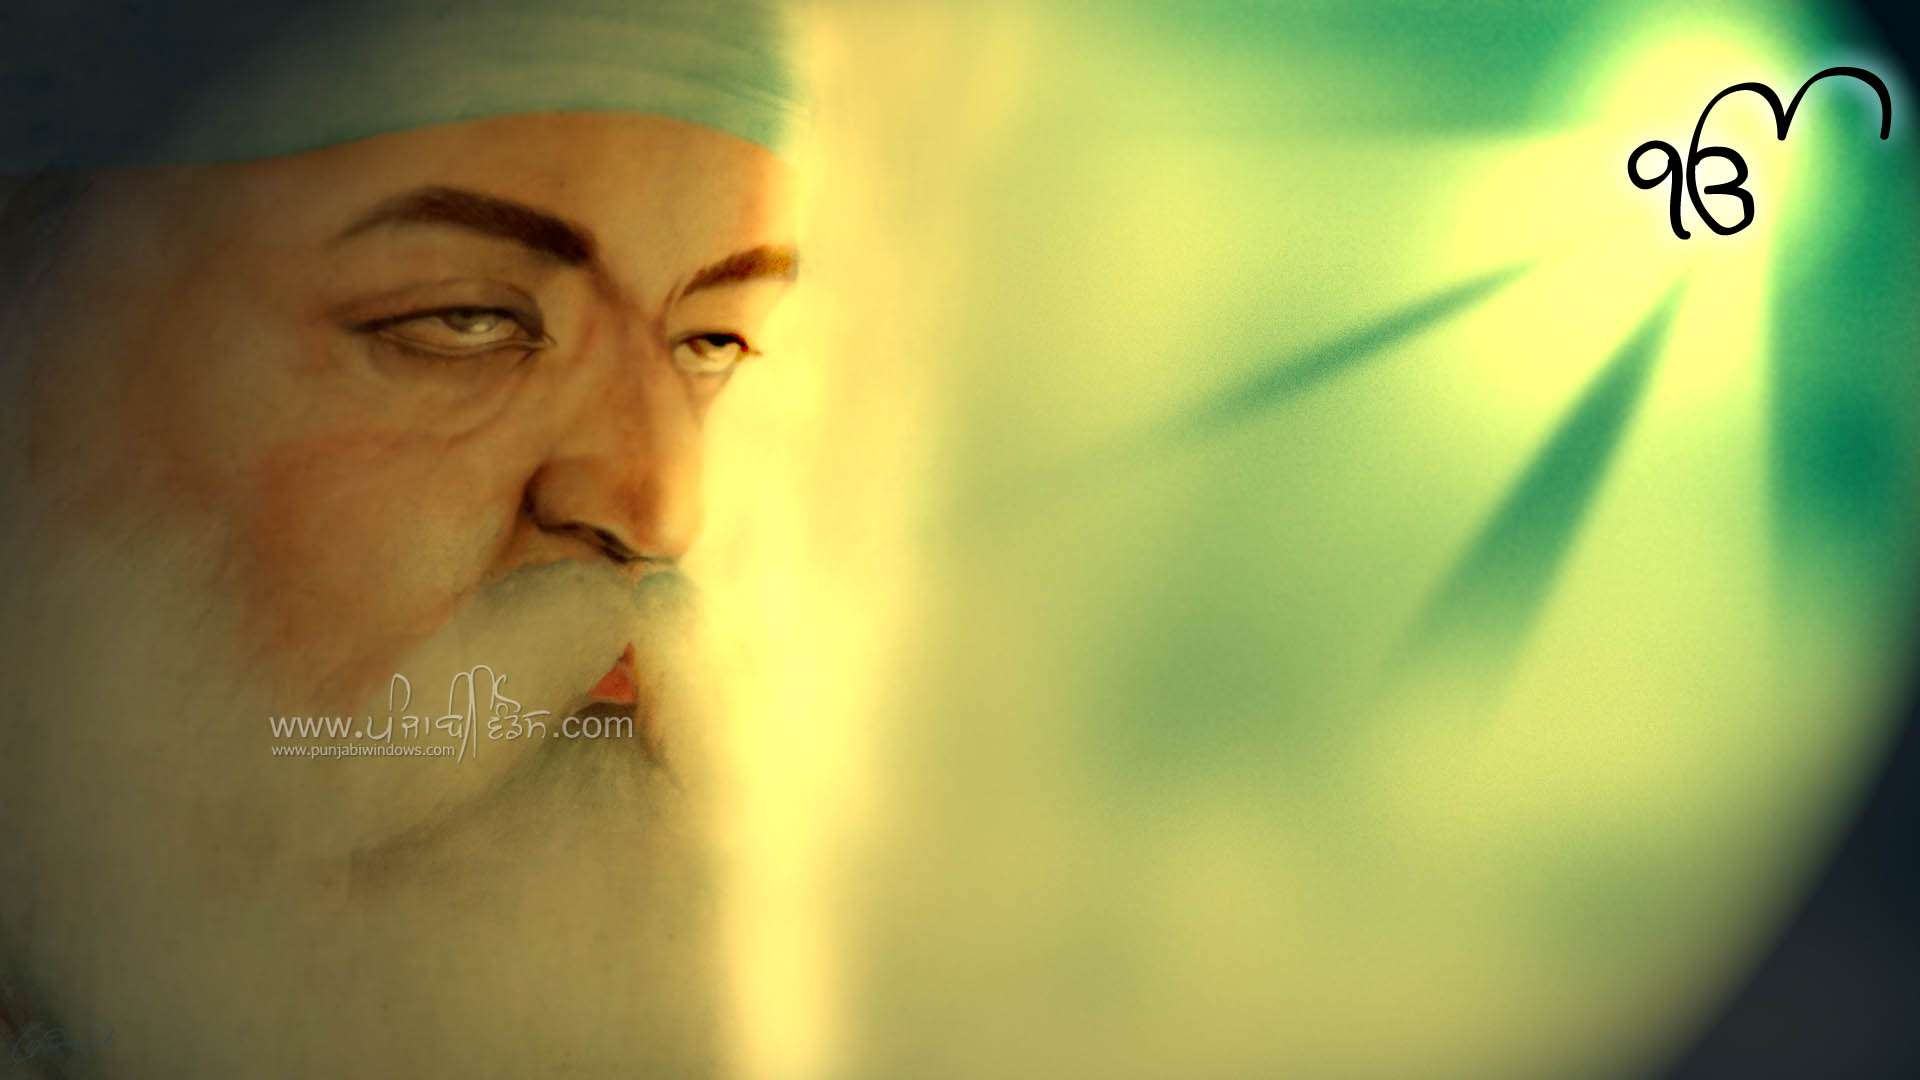 Sikh Guru Picture HD God Image Wallpaper Background A